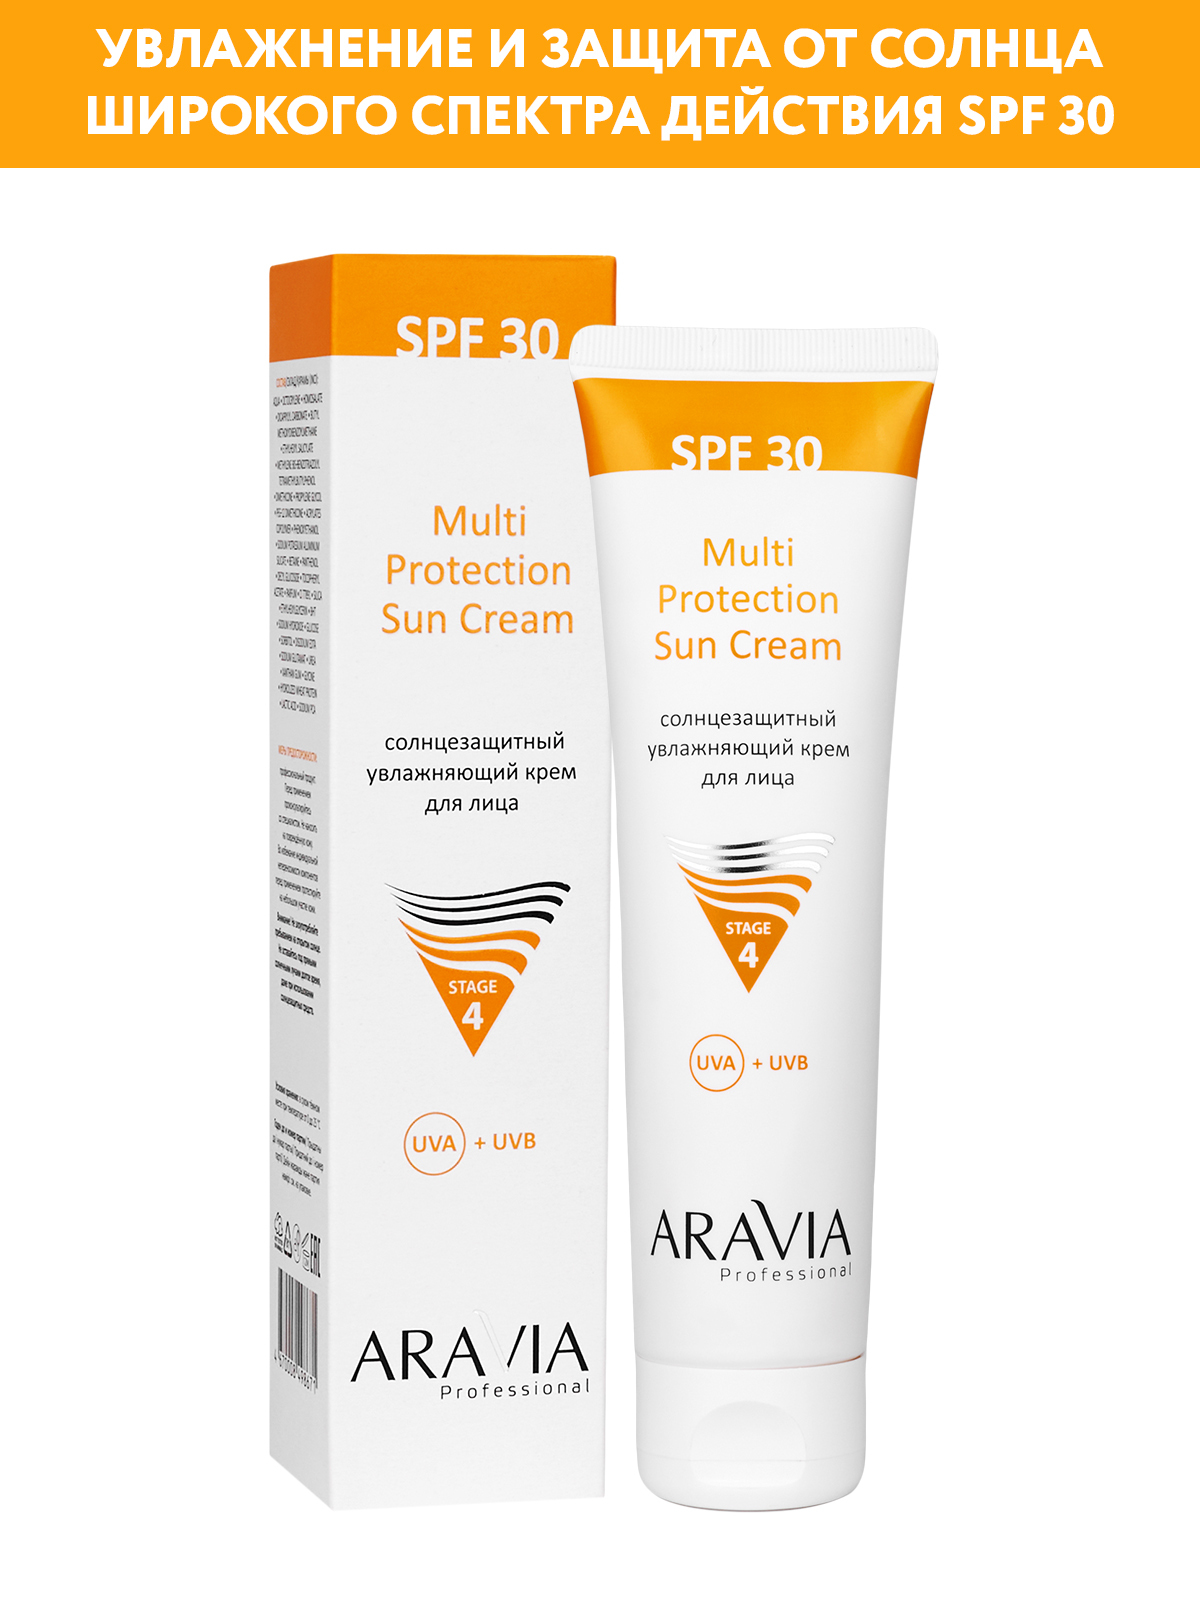 Hydrating sunscreen aravia spf 50. Аравия крем для лица с СПФ. Аравия СПФ 50. Аравия от солнца для лица. Nikols professional солнцезащитный крем.